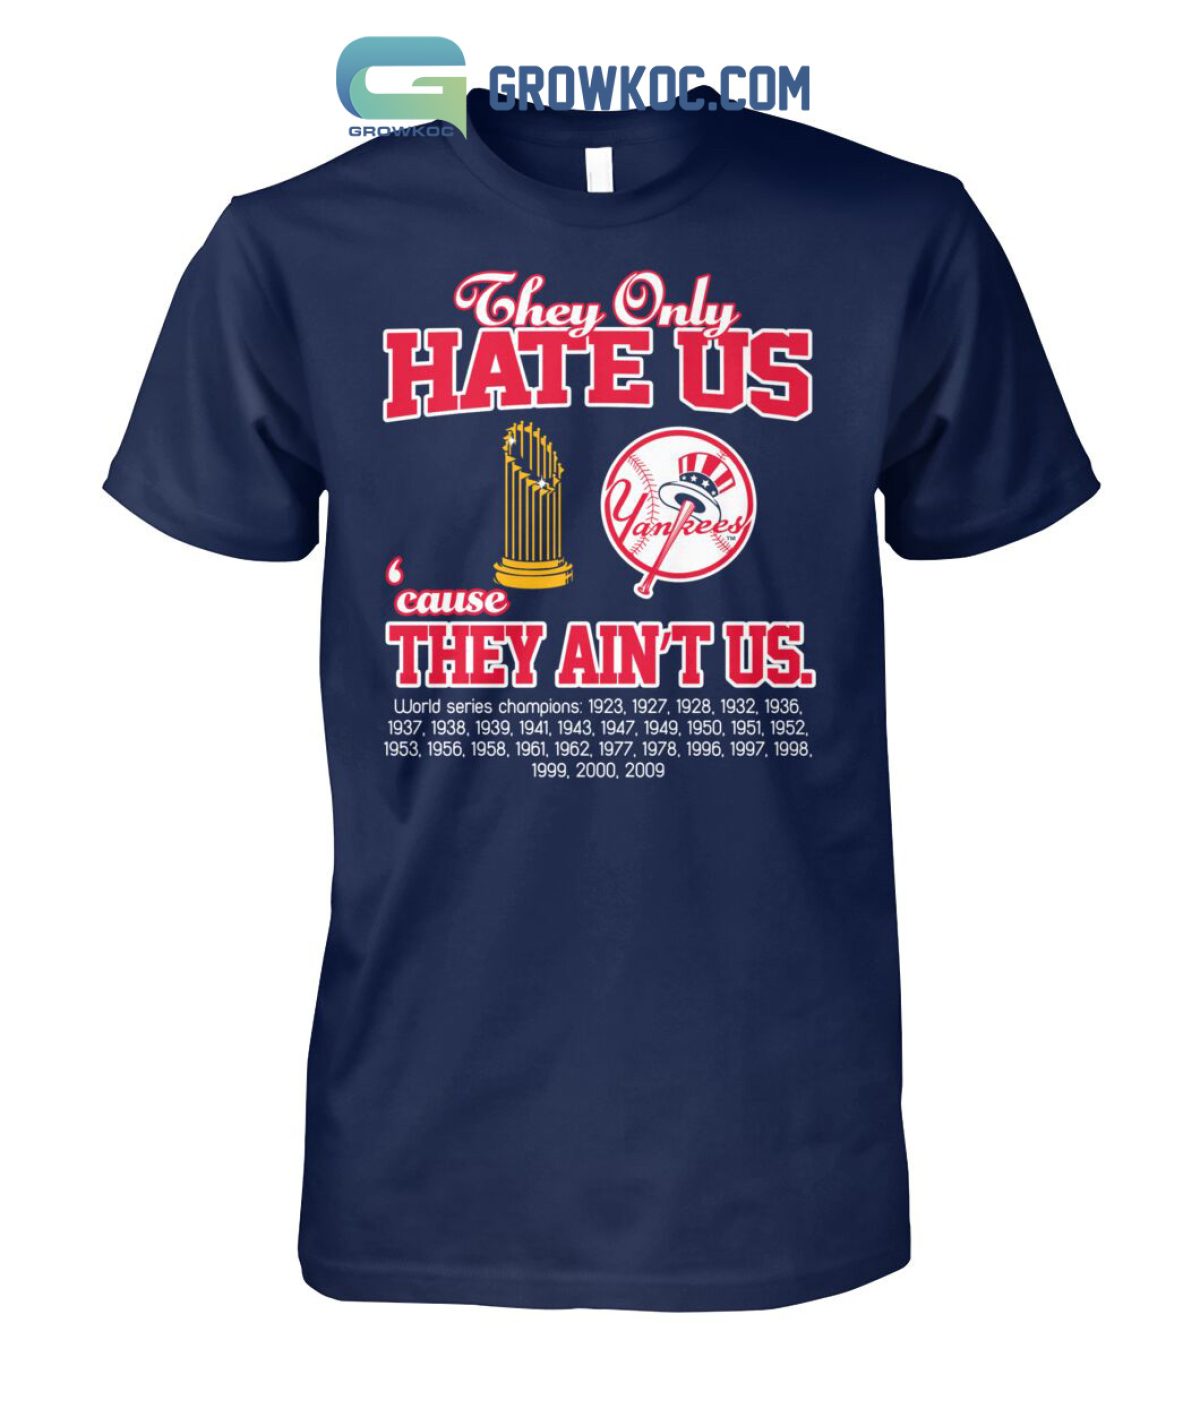 MLB New York Yankees Baseball We Become The Champions Women's T-Shirt